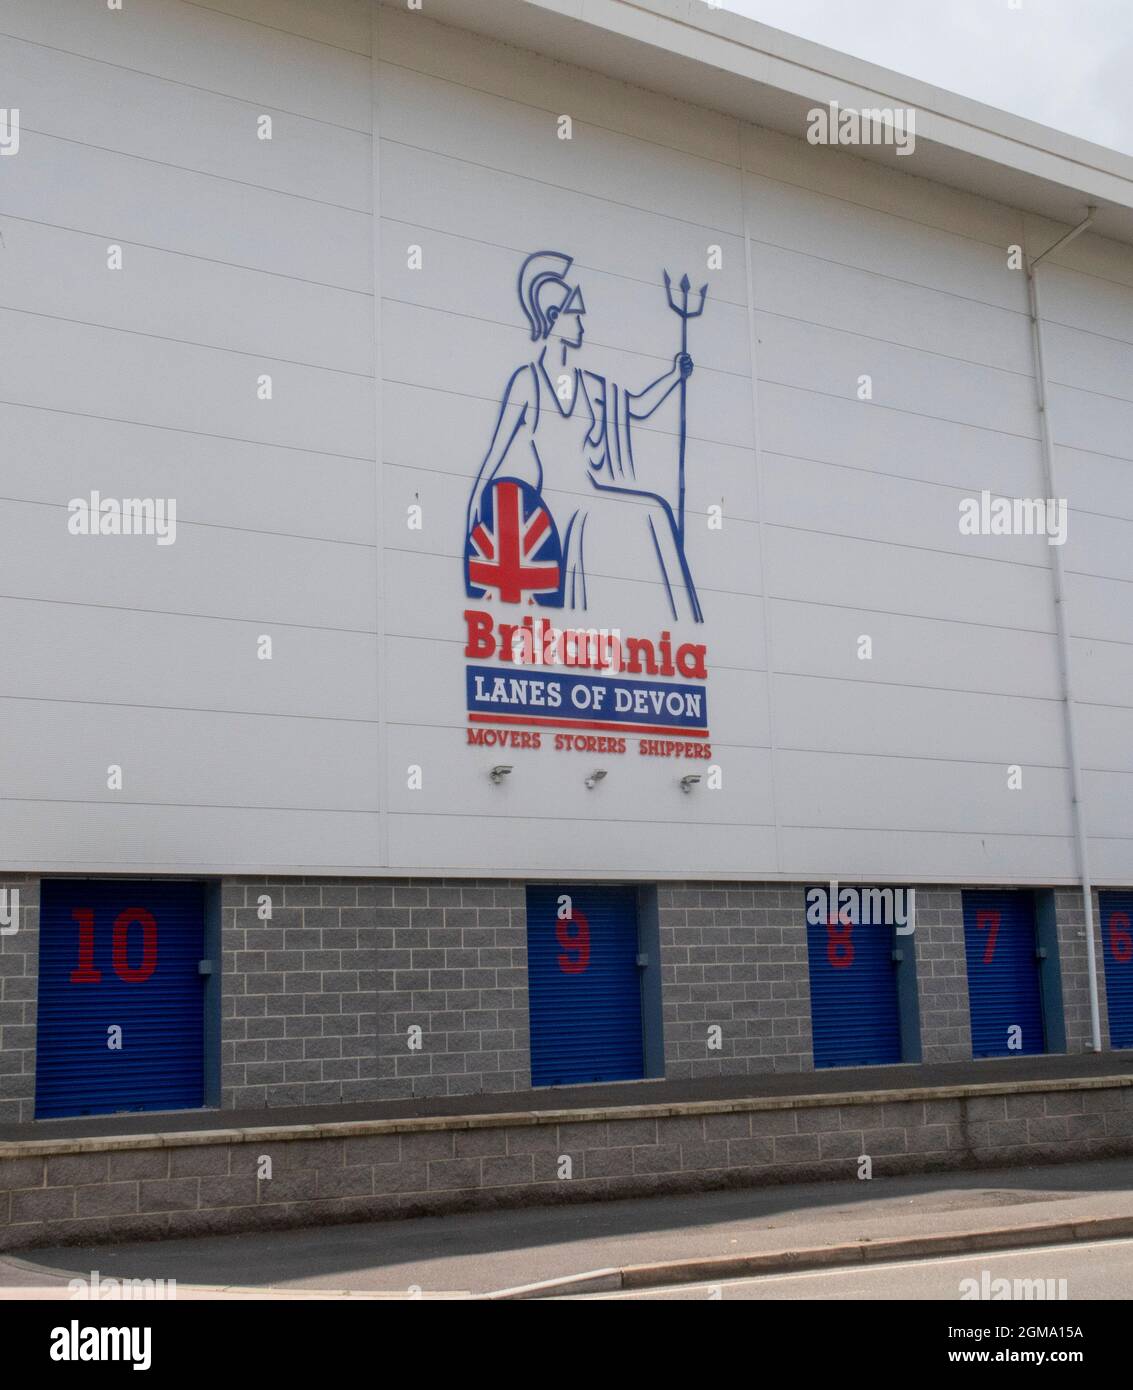 Britannia movers, storage, shippers logo on a Self Store storage facility warehouse, Marsh Barton, Exeter, Devon, UK Stock Photo